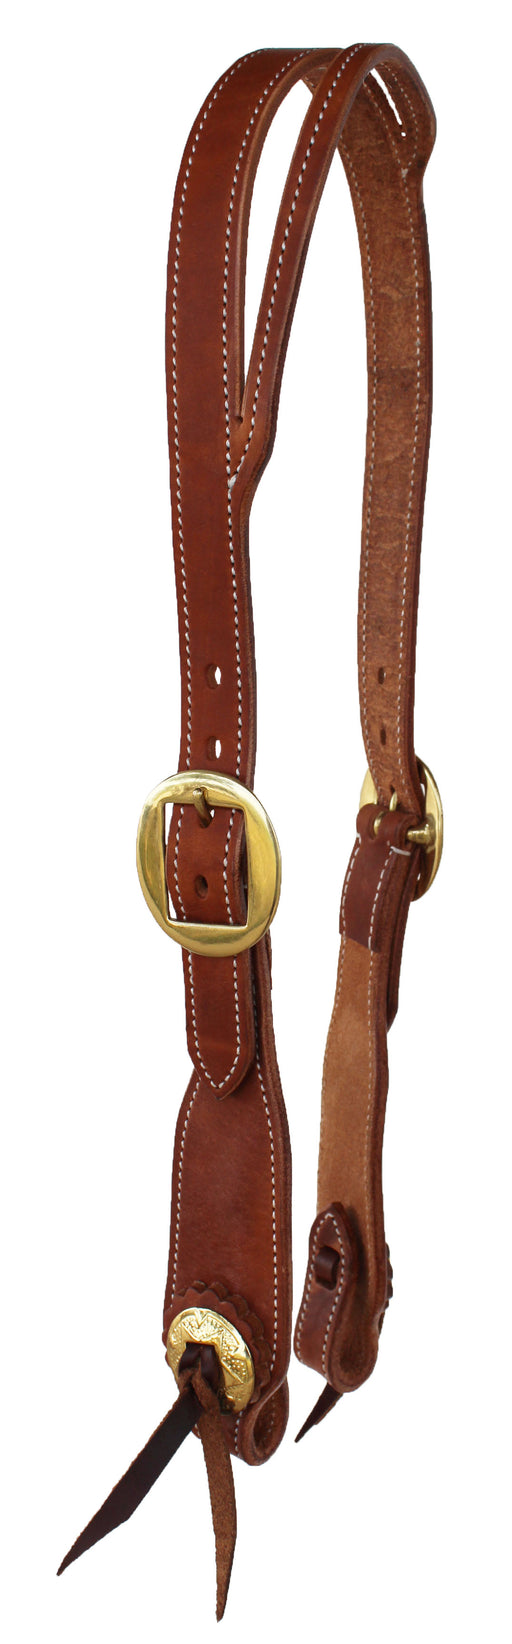 Horse Tan Leather Adjustable Split Ear Headstall w/ Tie Ends 78RT06